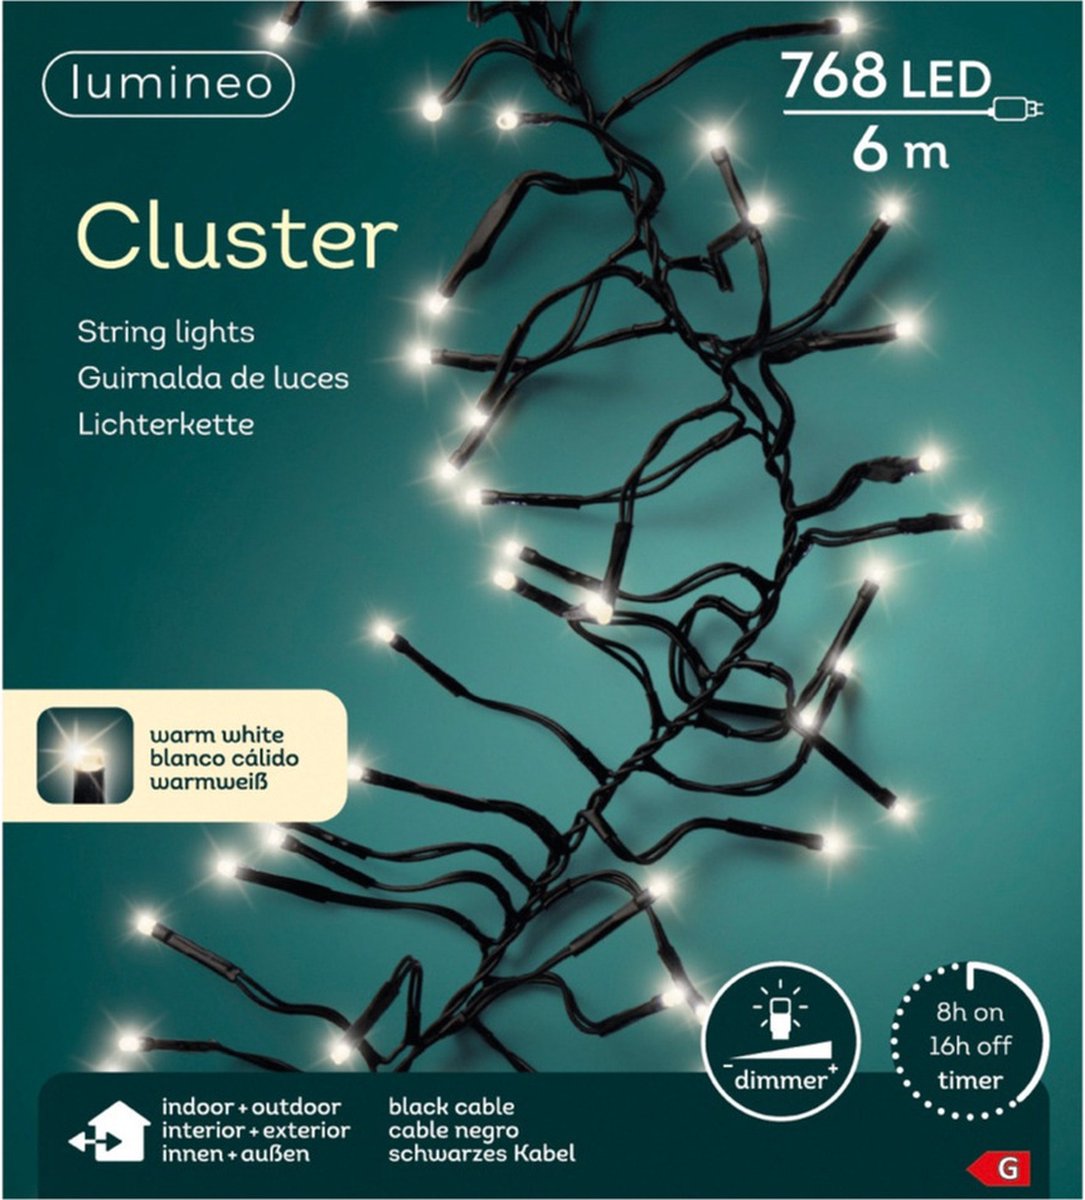 Cluster lights 768led 6m warm white | Lumineo 494696 | bol.com